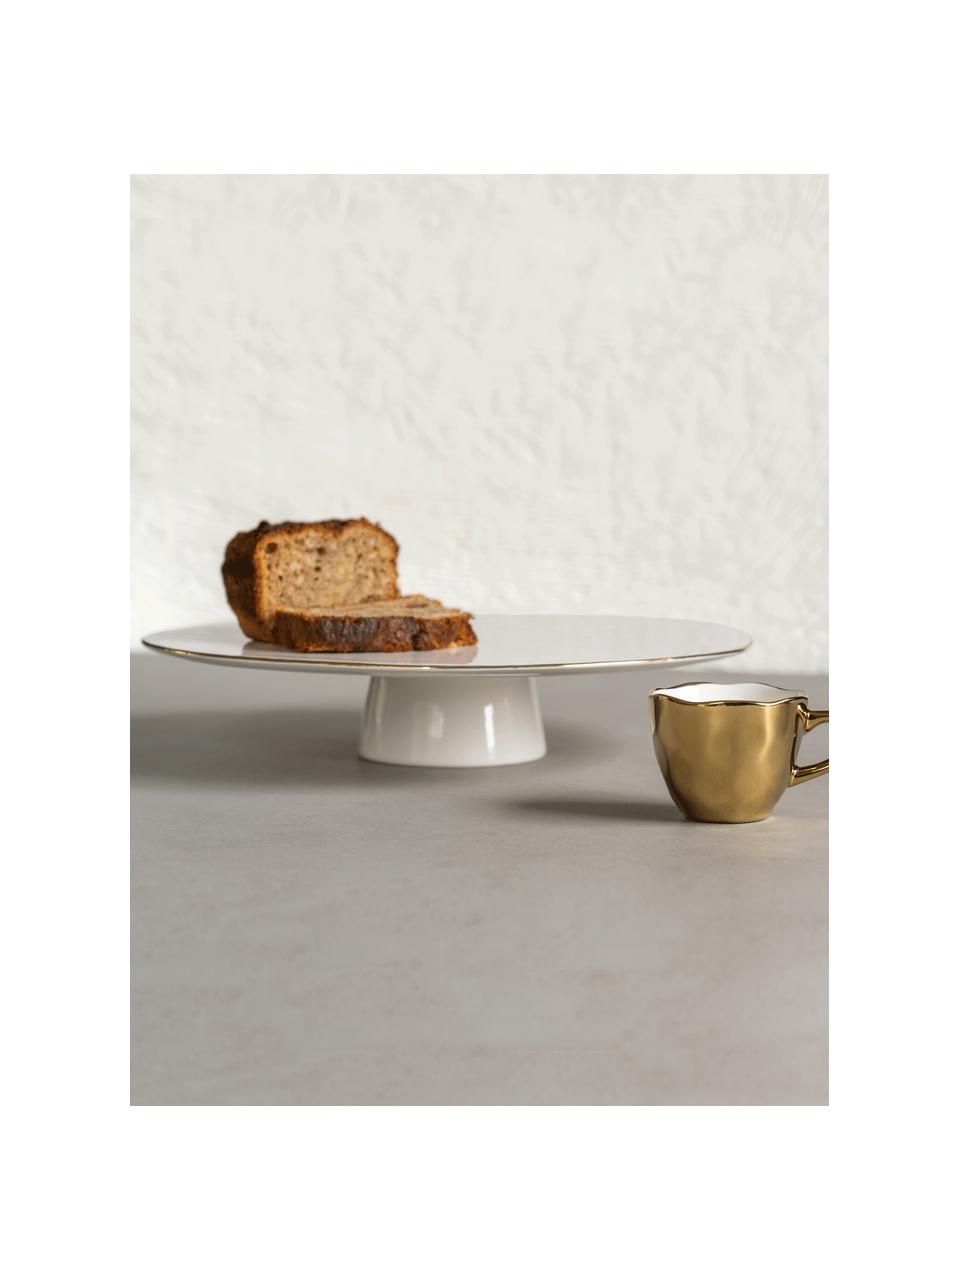 Tortenplatte Good Morning aus Porzellan mit goldenem Rand, Ø 29 cm, Porzellan, Weiß, Goldfarben, Ø 29 x H 6 cm